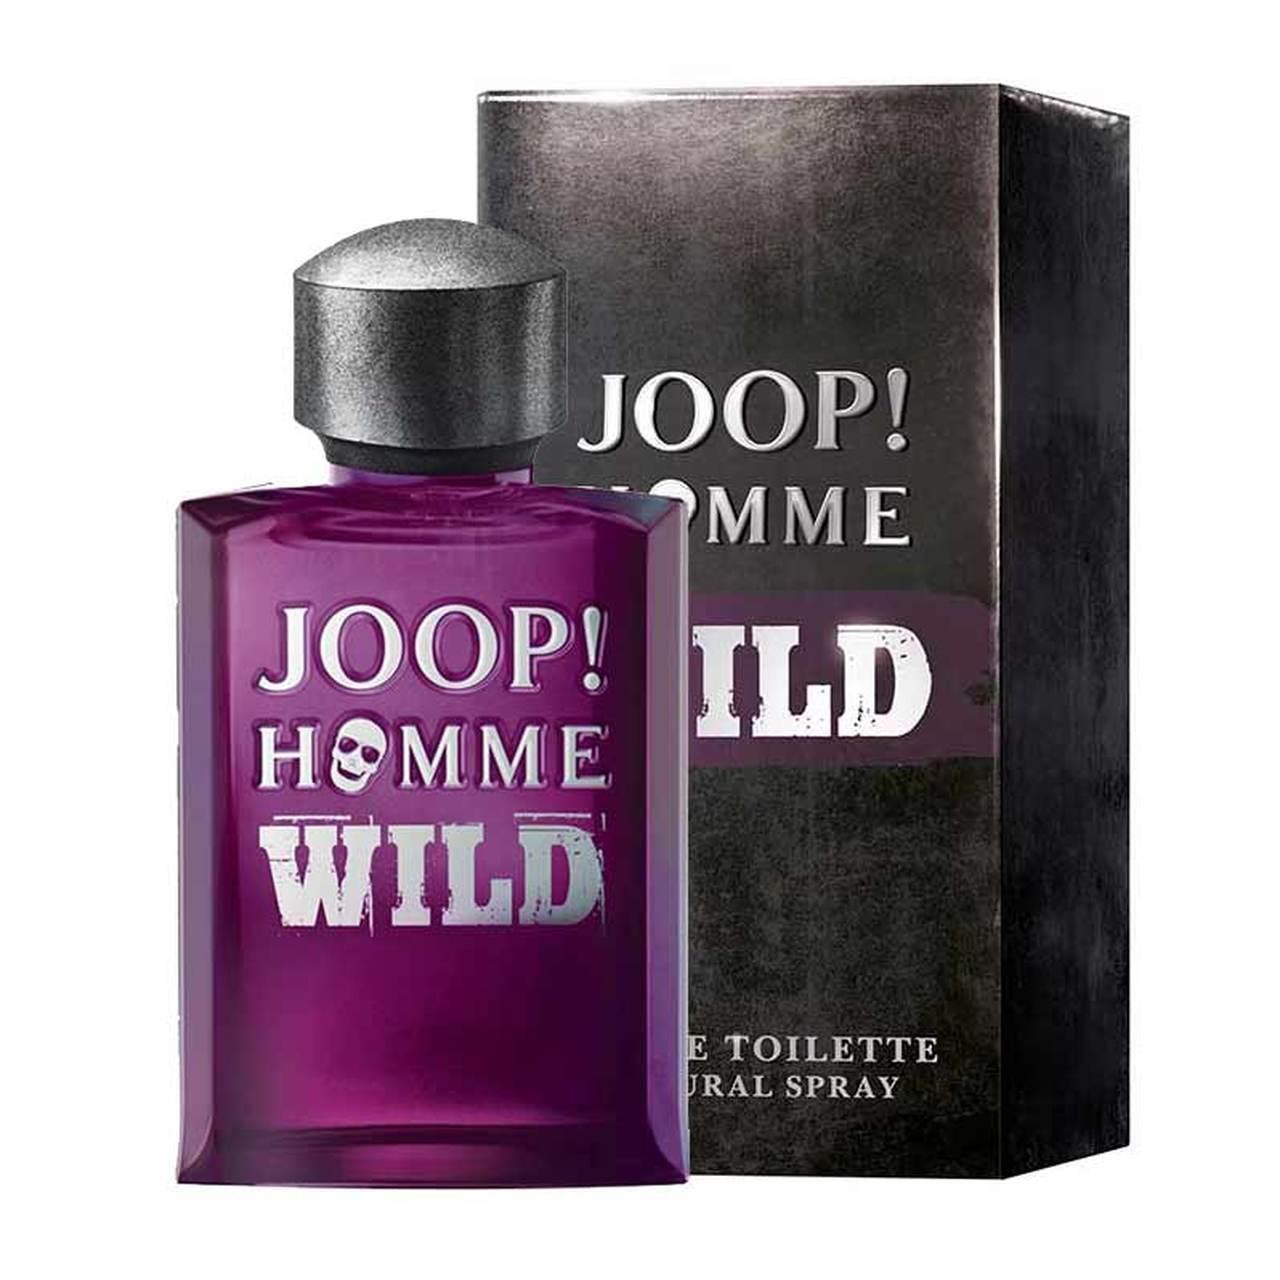 Joop Homme Wild Eau de Toilette Spray - Perfume Oasis